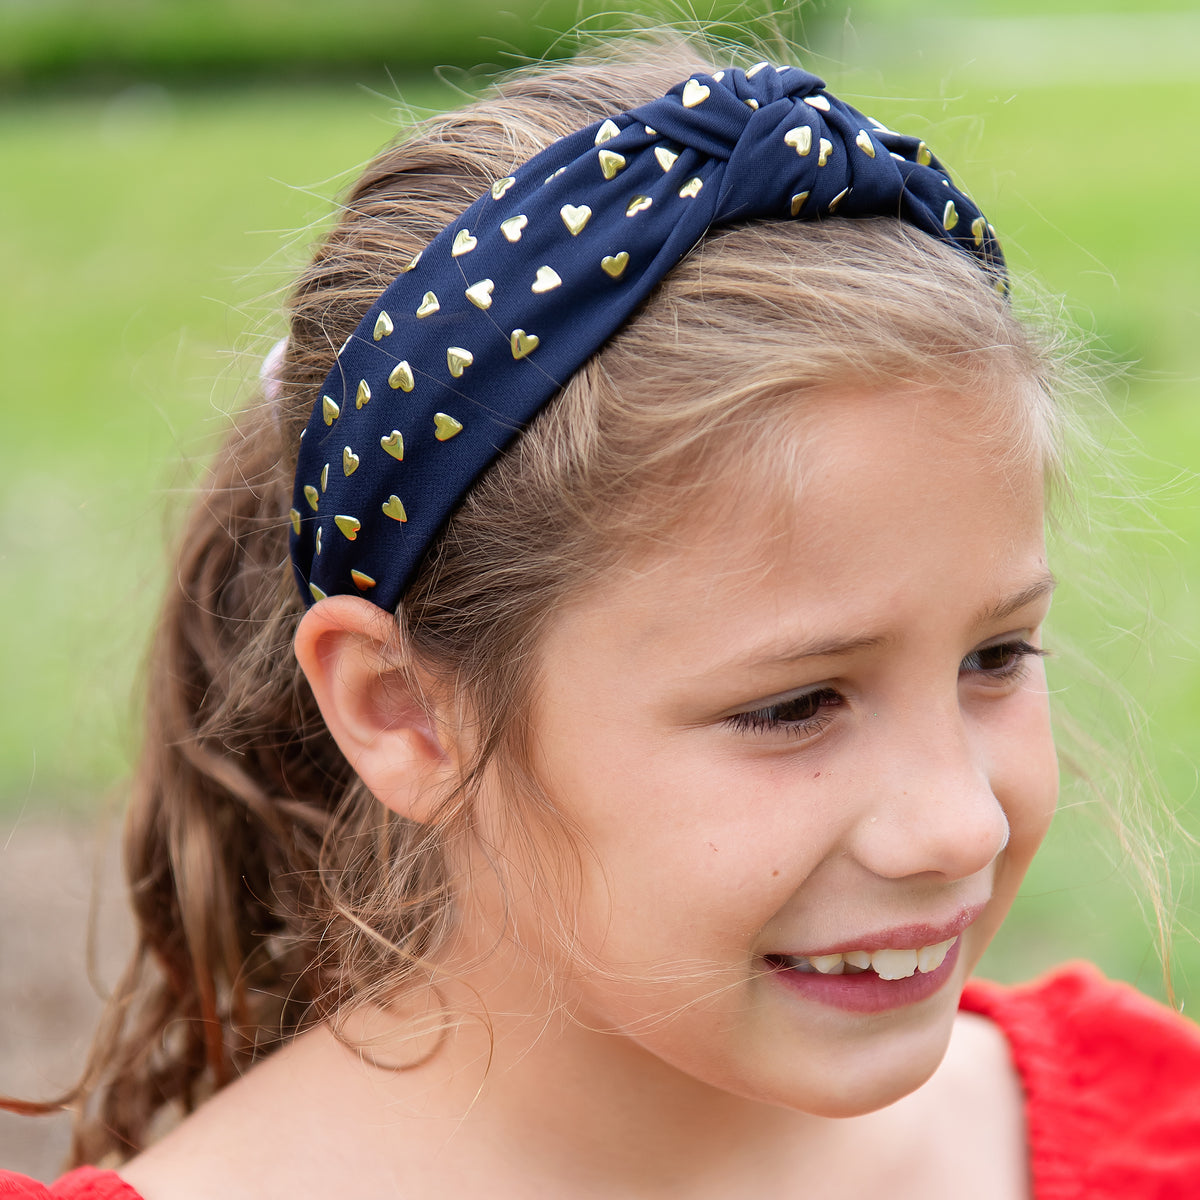 Golden Thread, Inc. Royal Blue Pearl Headband